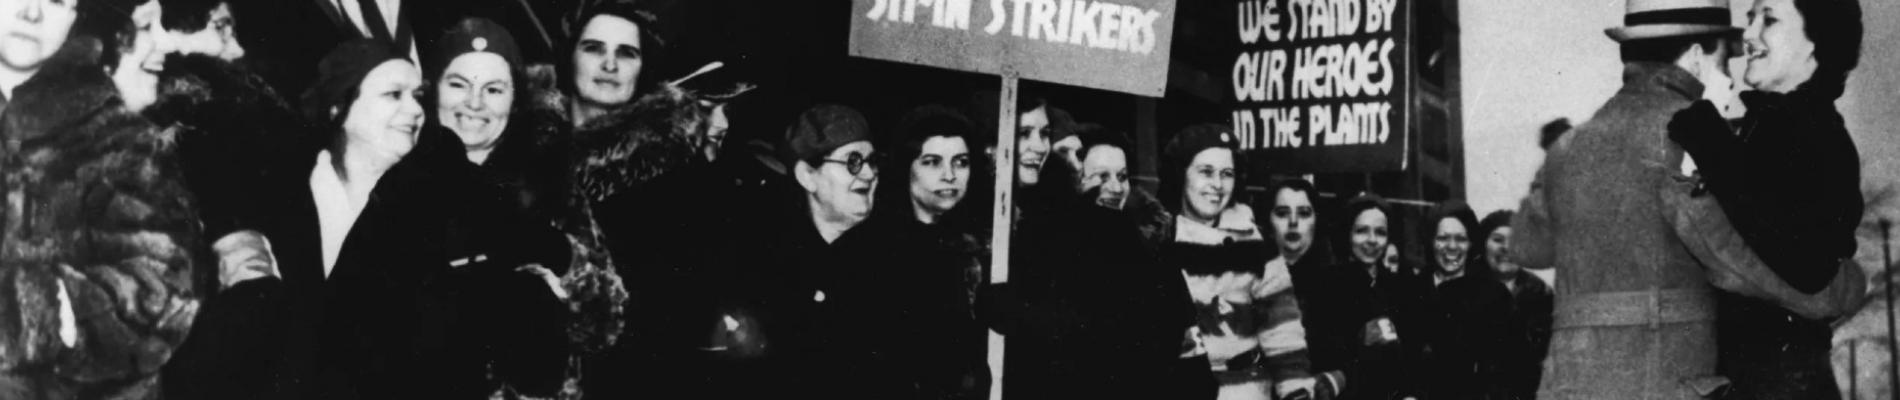 Michigan Women in & Around the Labor Movement